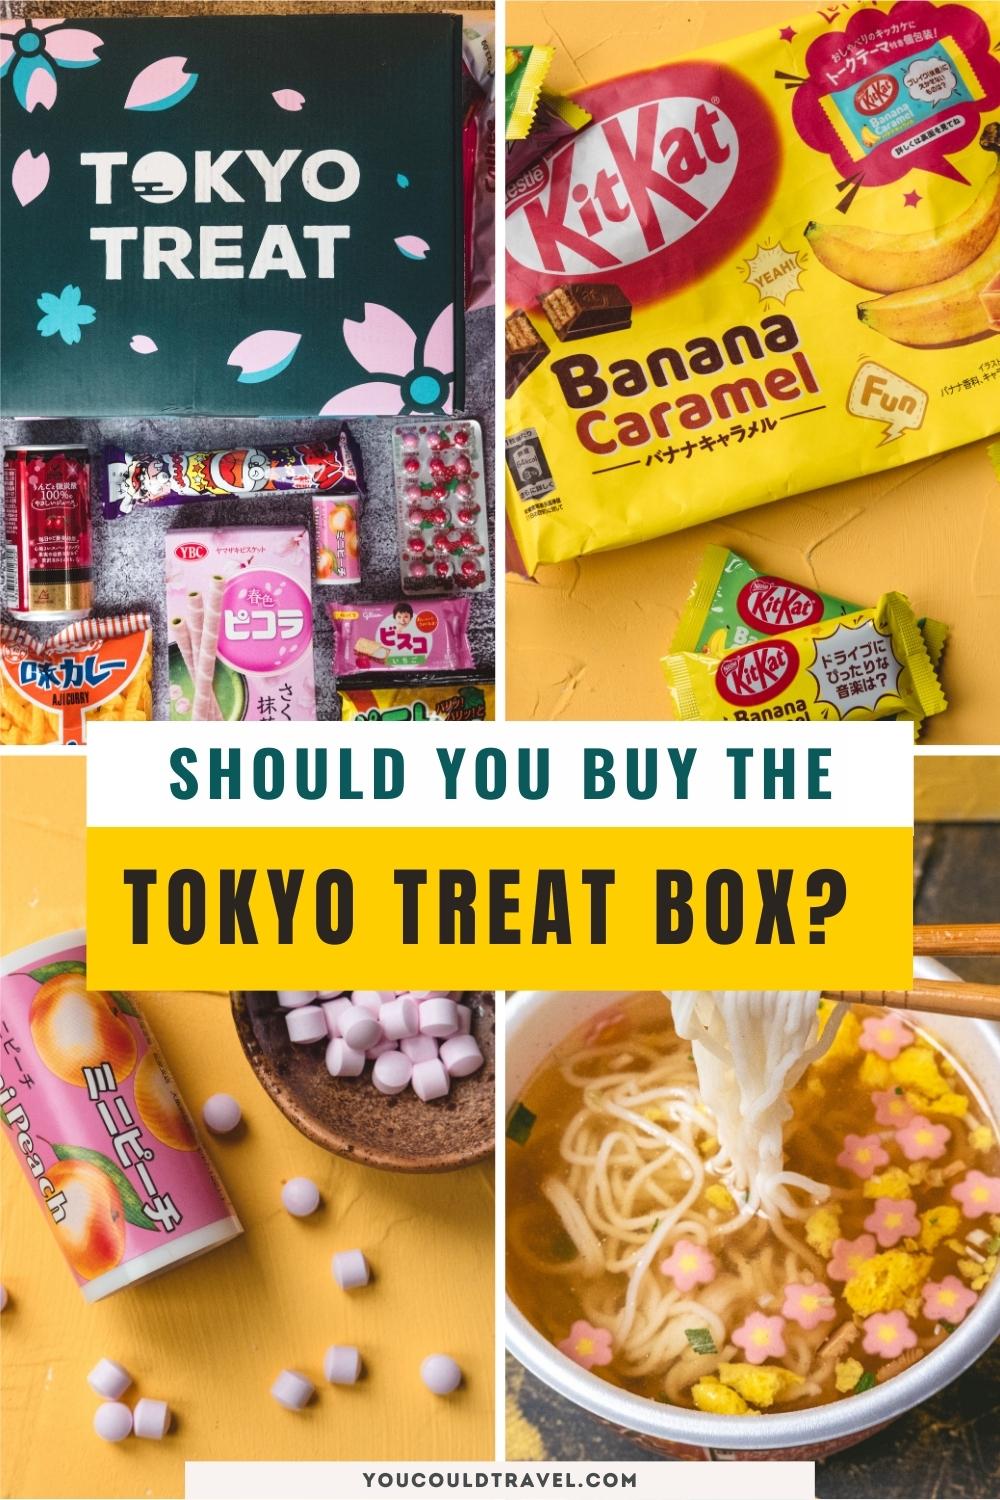 Is the Tokyo Treat box worth it?